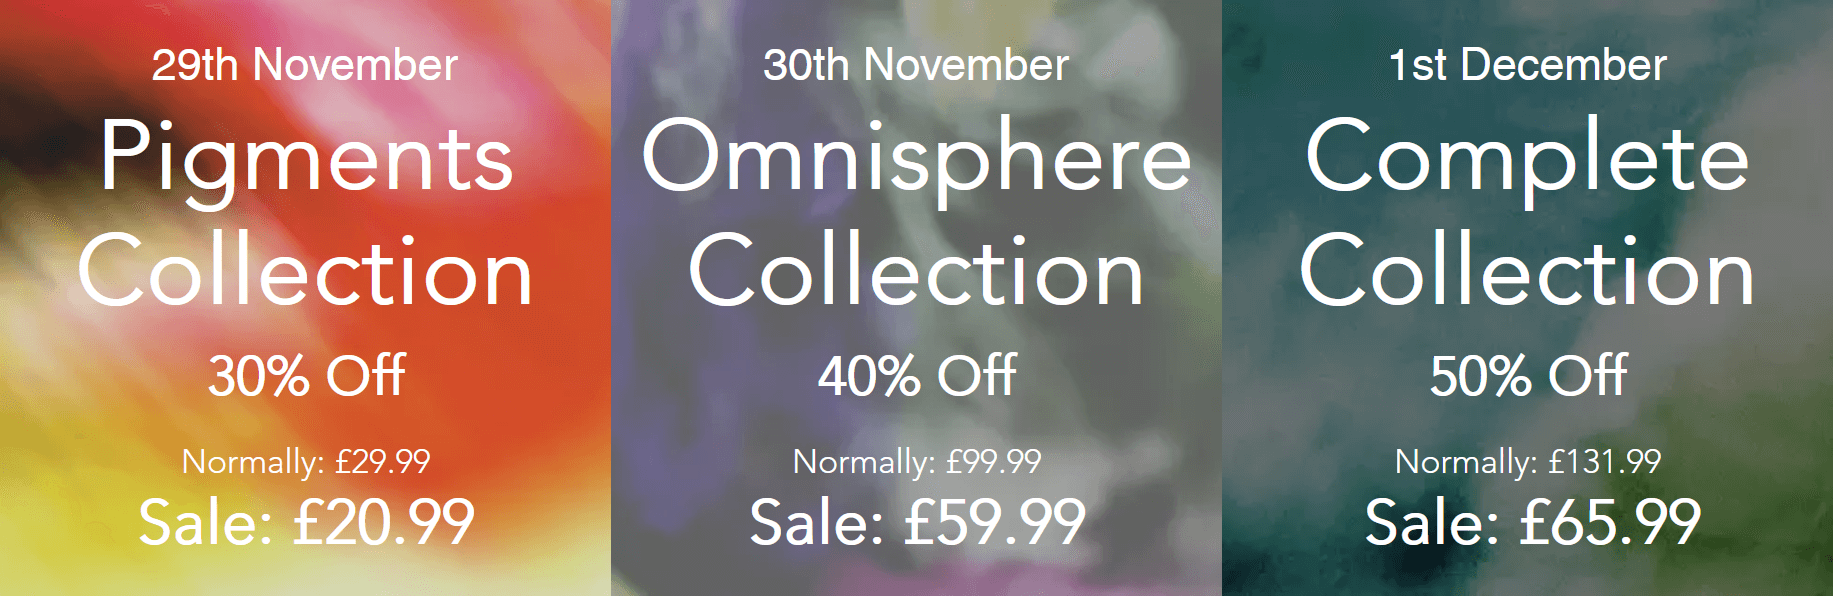 Omnisphere 2 sale prices